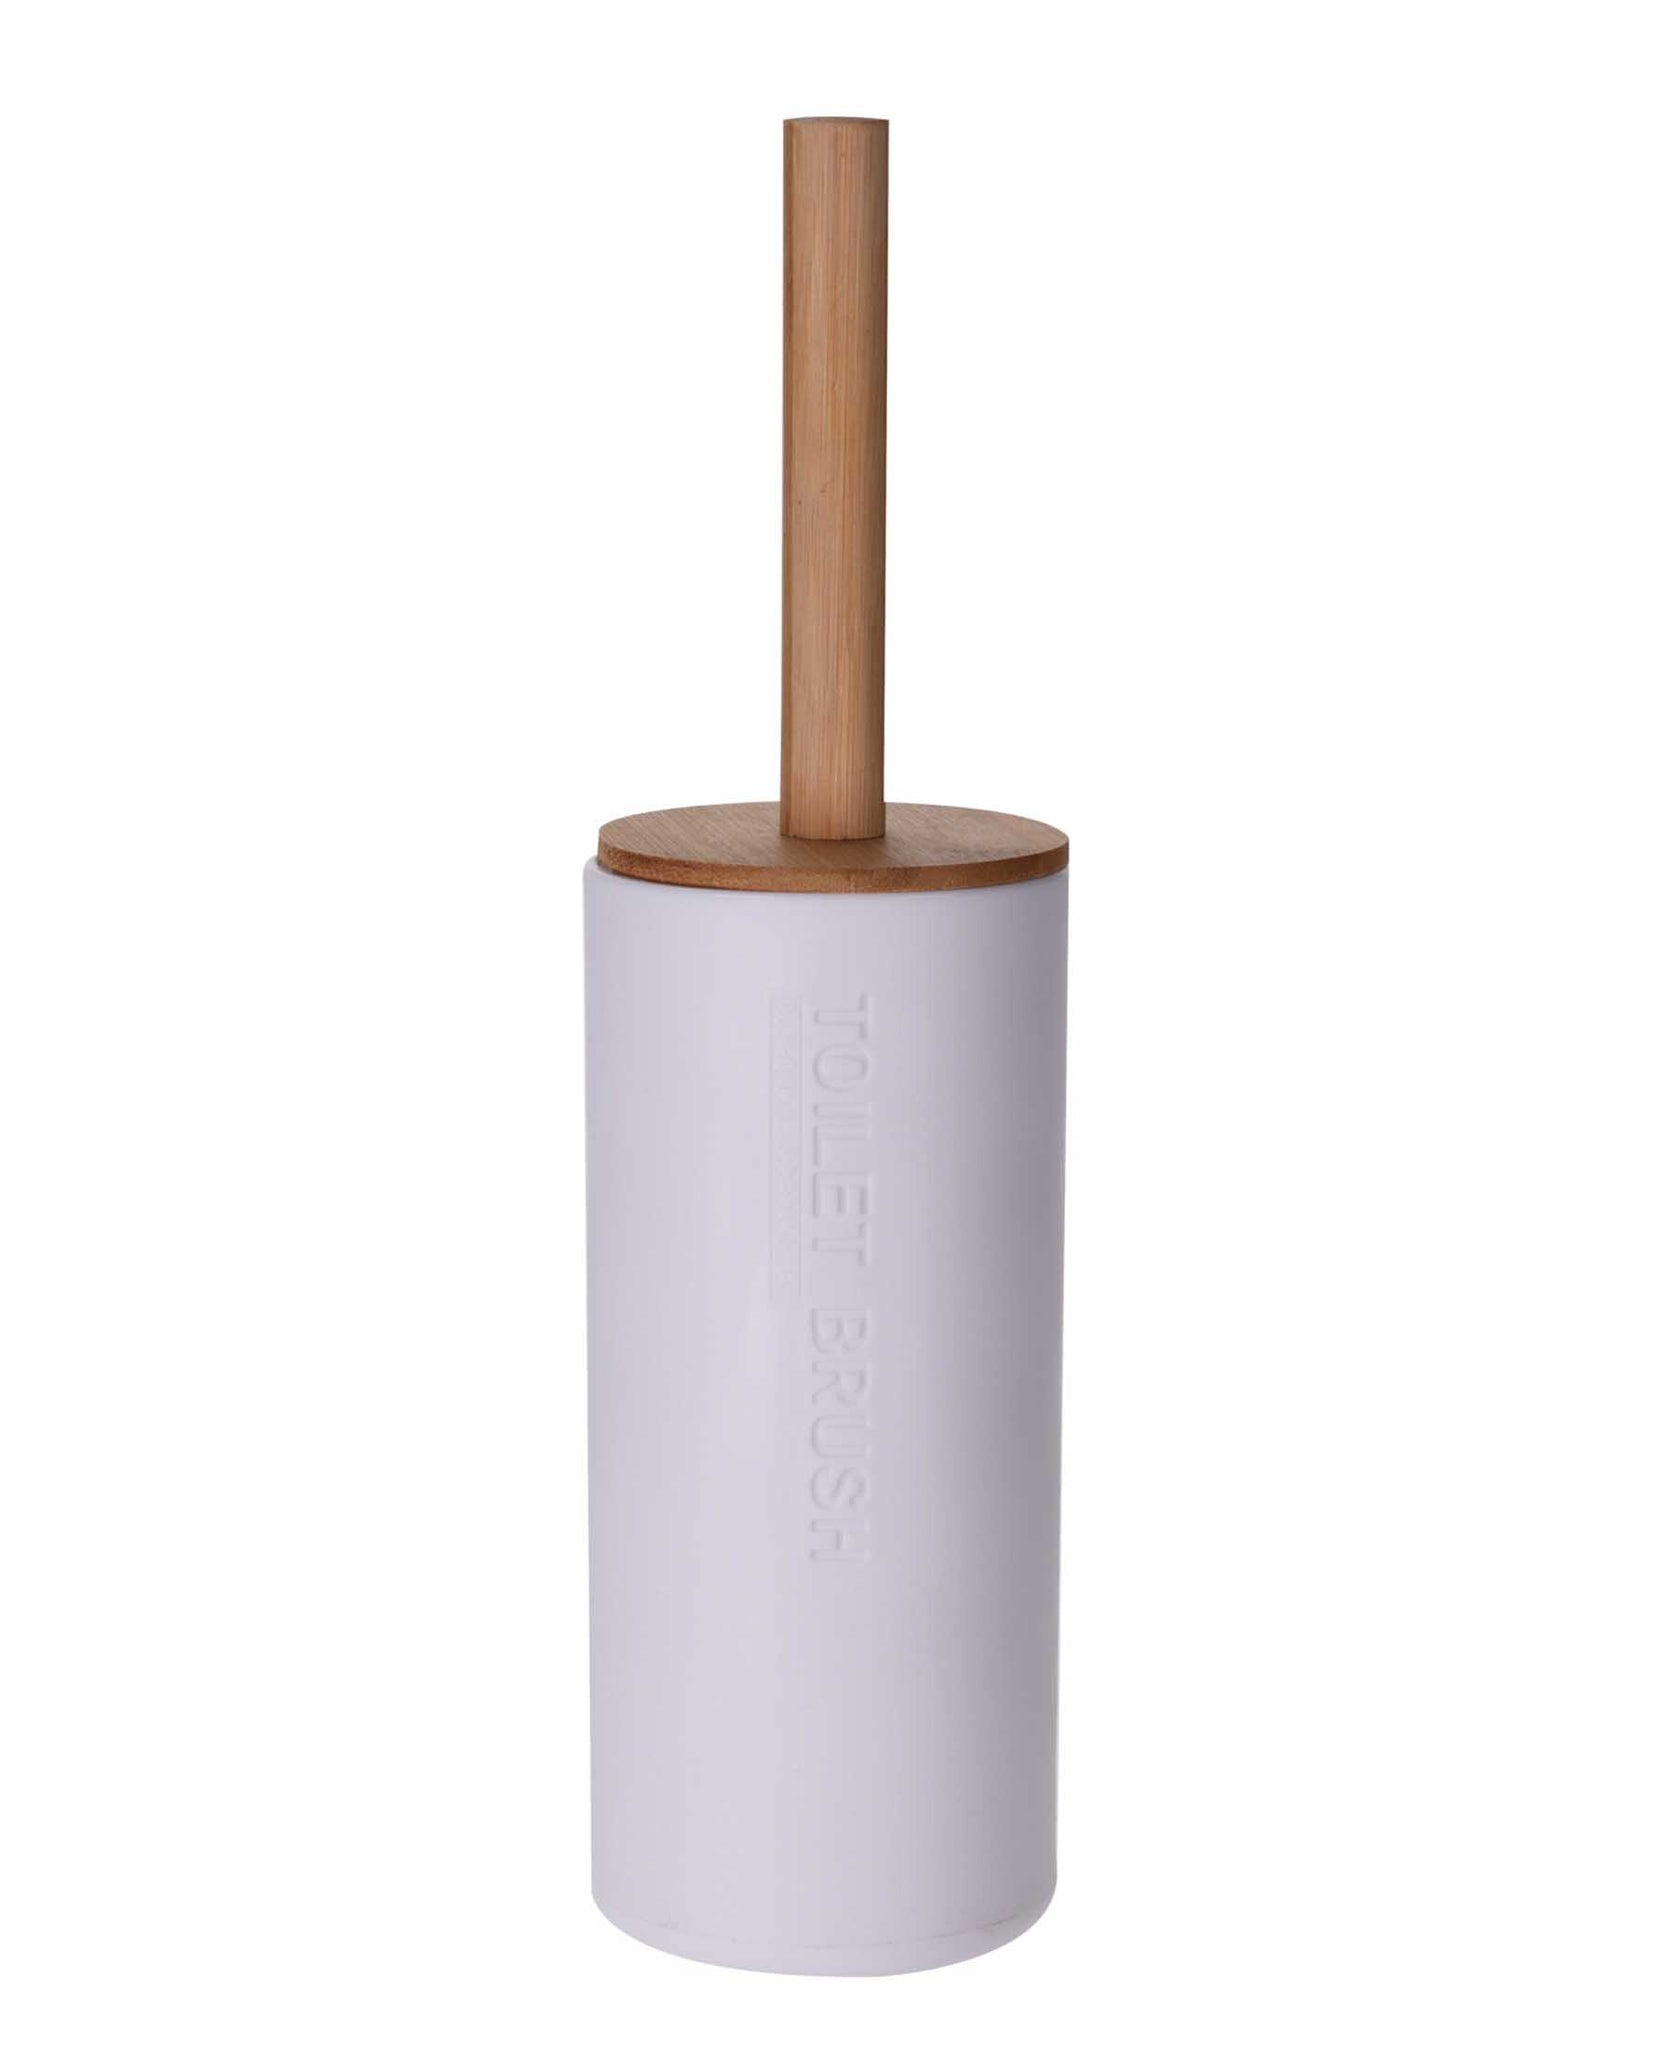 Bamboo Toilet Brush With Holder - White